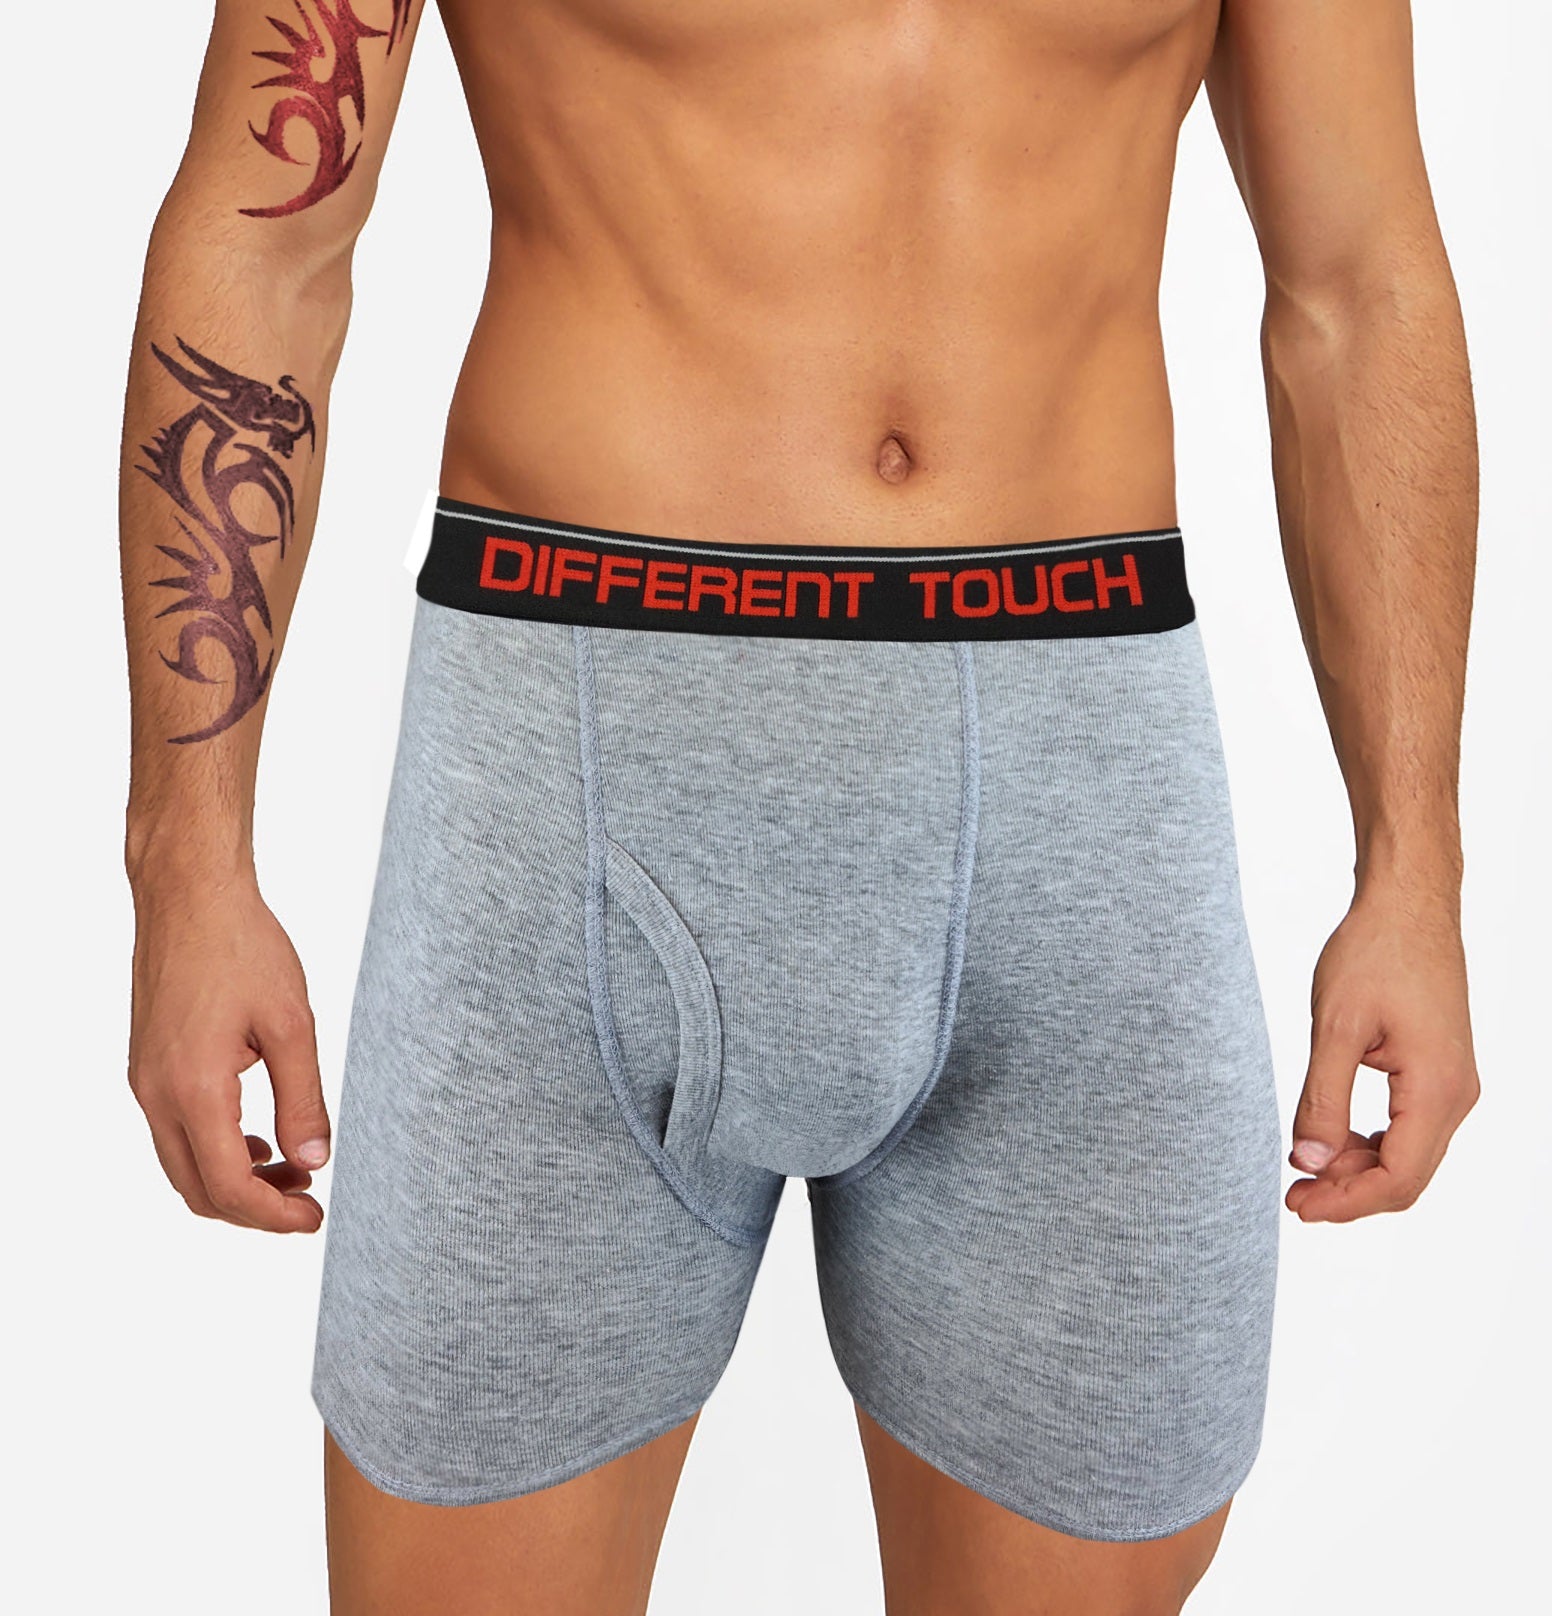 Men's Big & Tall USA Classic Design Log Leg Boxer Briefs Underwear || Different Touch